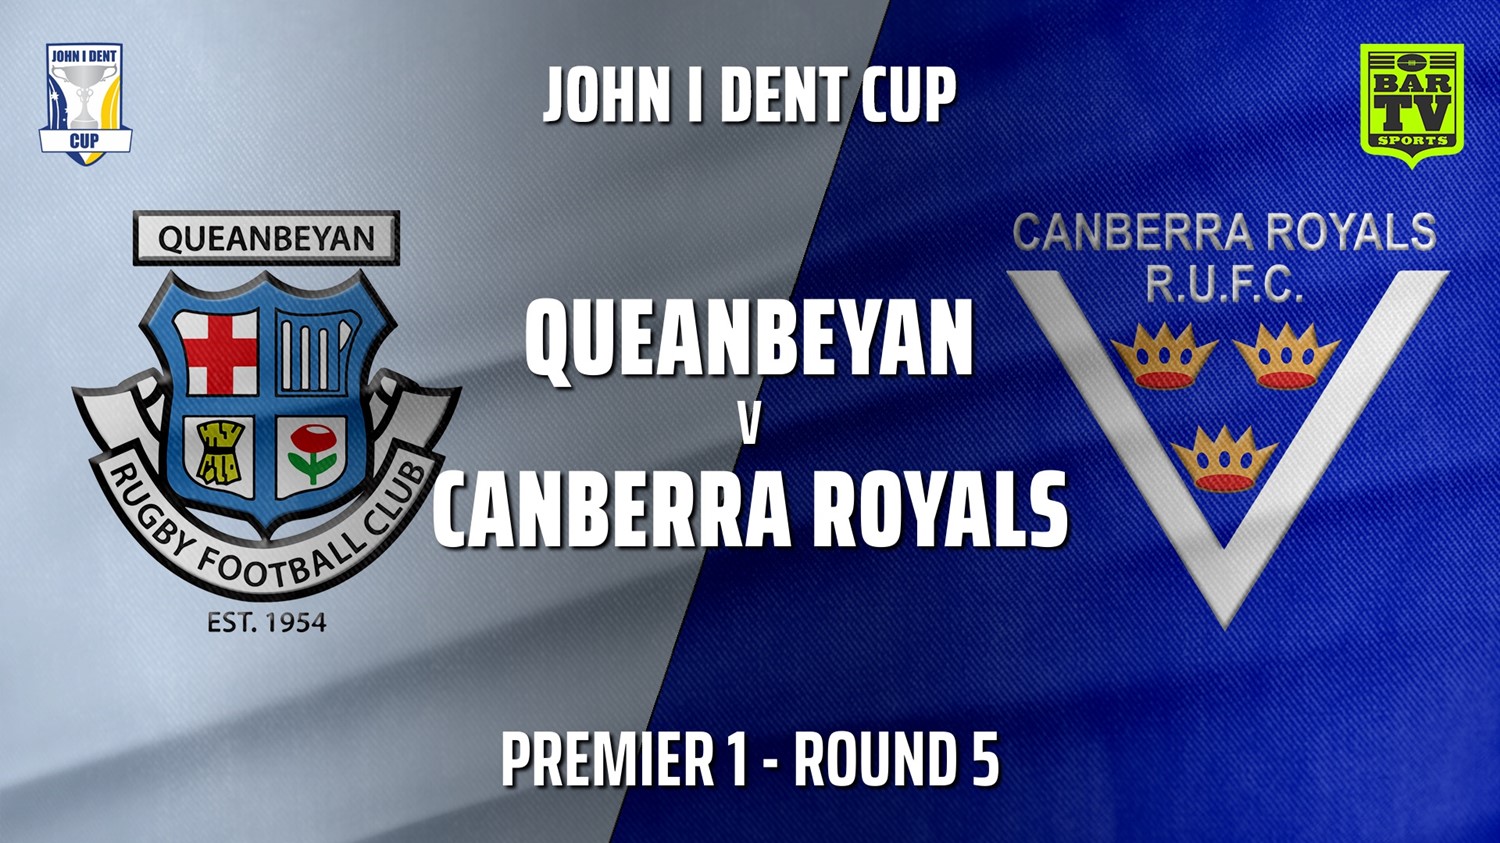 210522-John I Dent Round 5 - Premier 1 - Queanbeyan Whites v Canberra Royals Minigame Slate Image